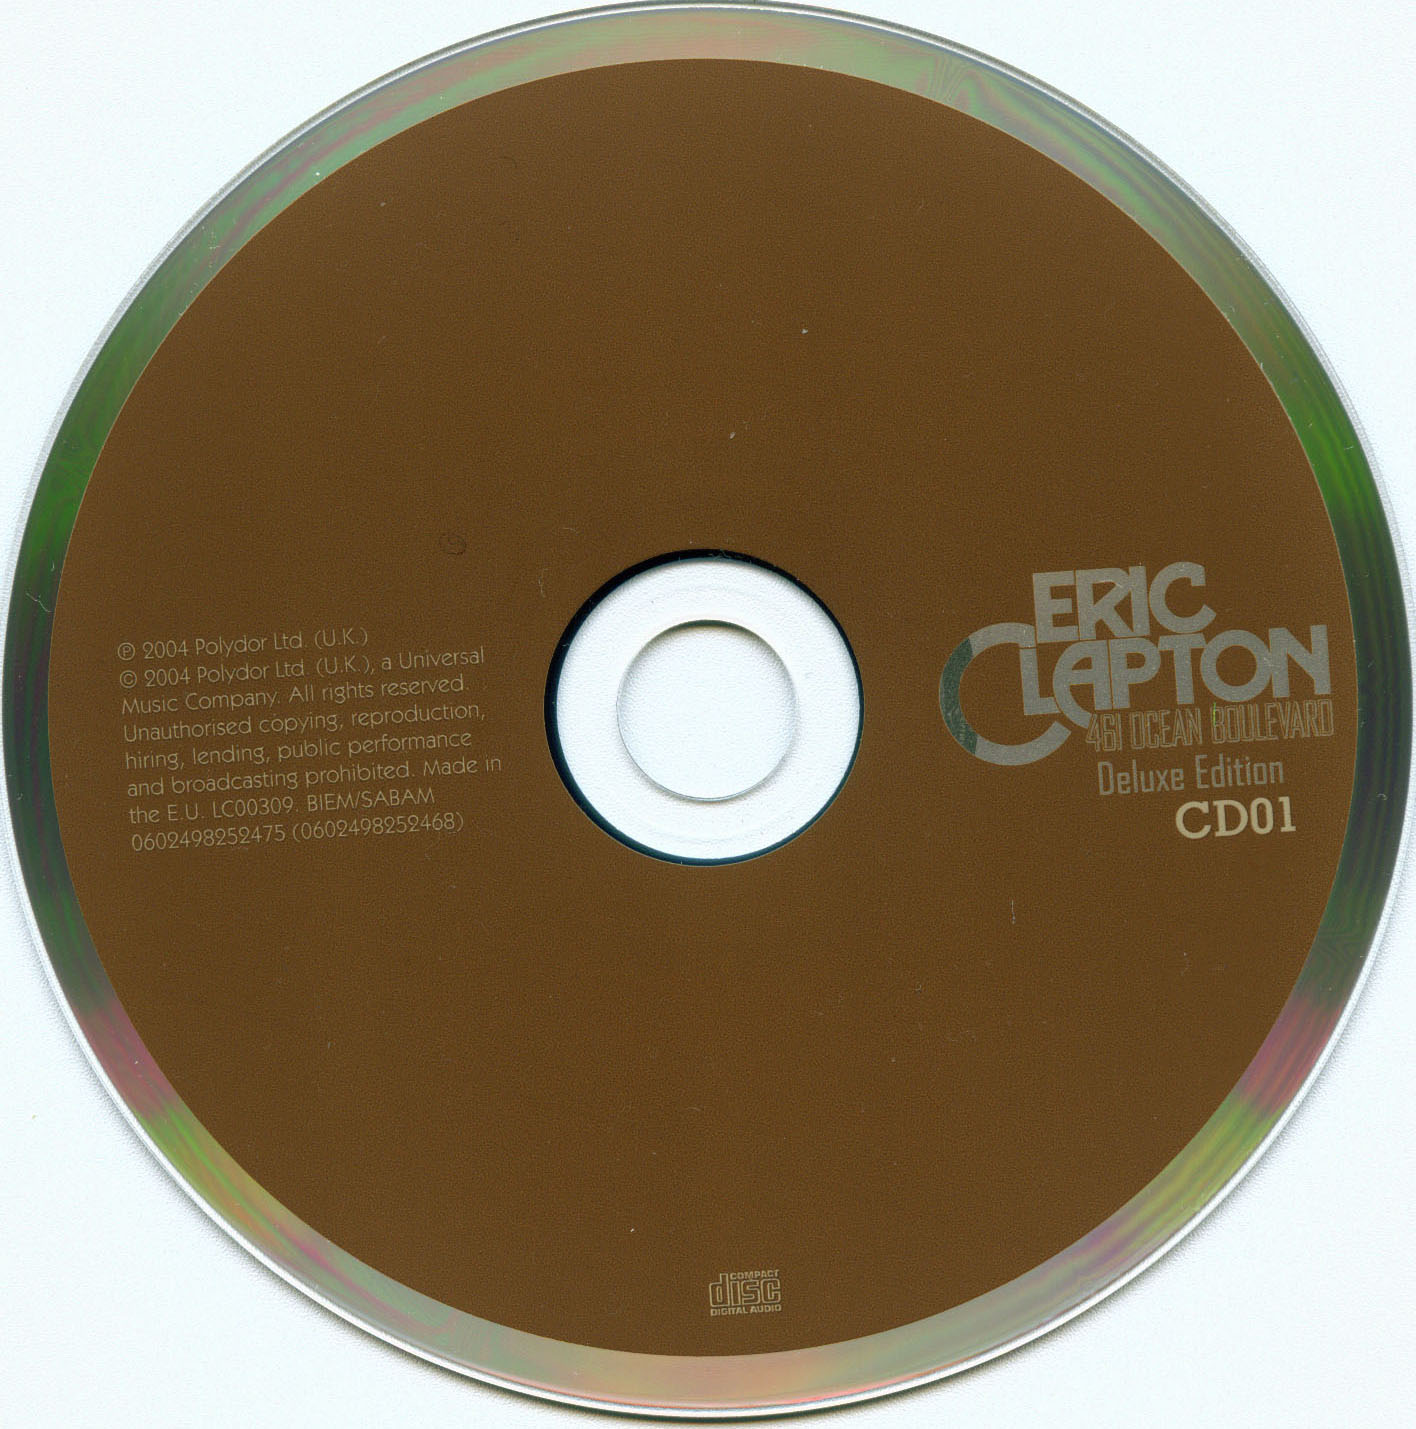 Release “461 Ocean Boulevard” by Eric Clapton - Cover Art - MusicBrainz